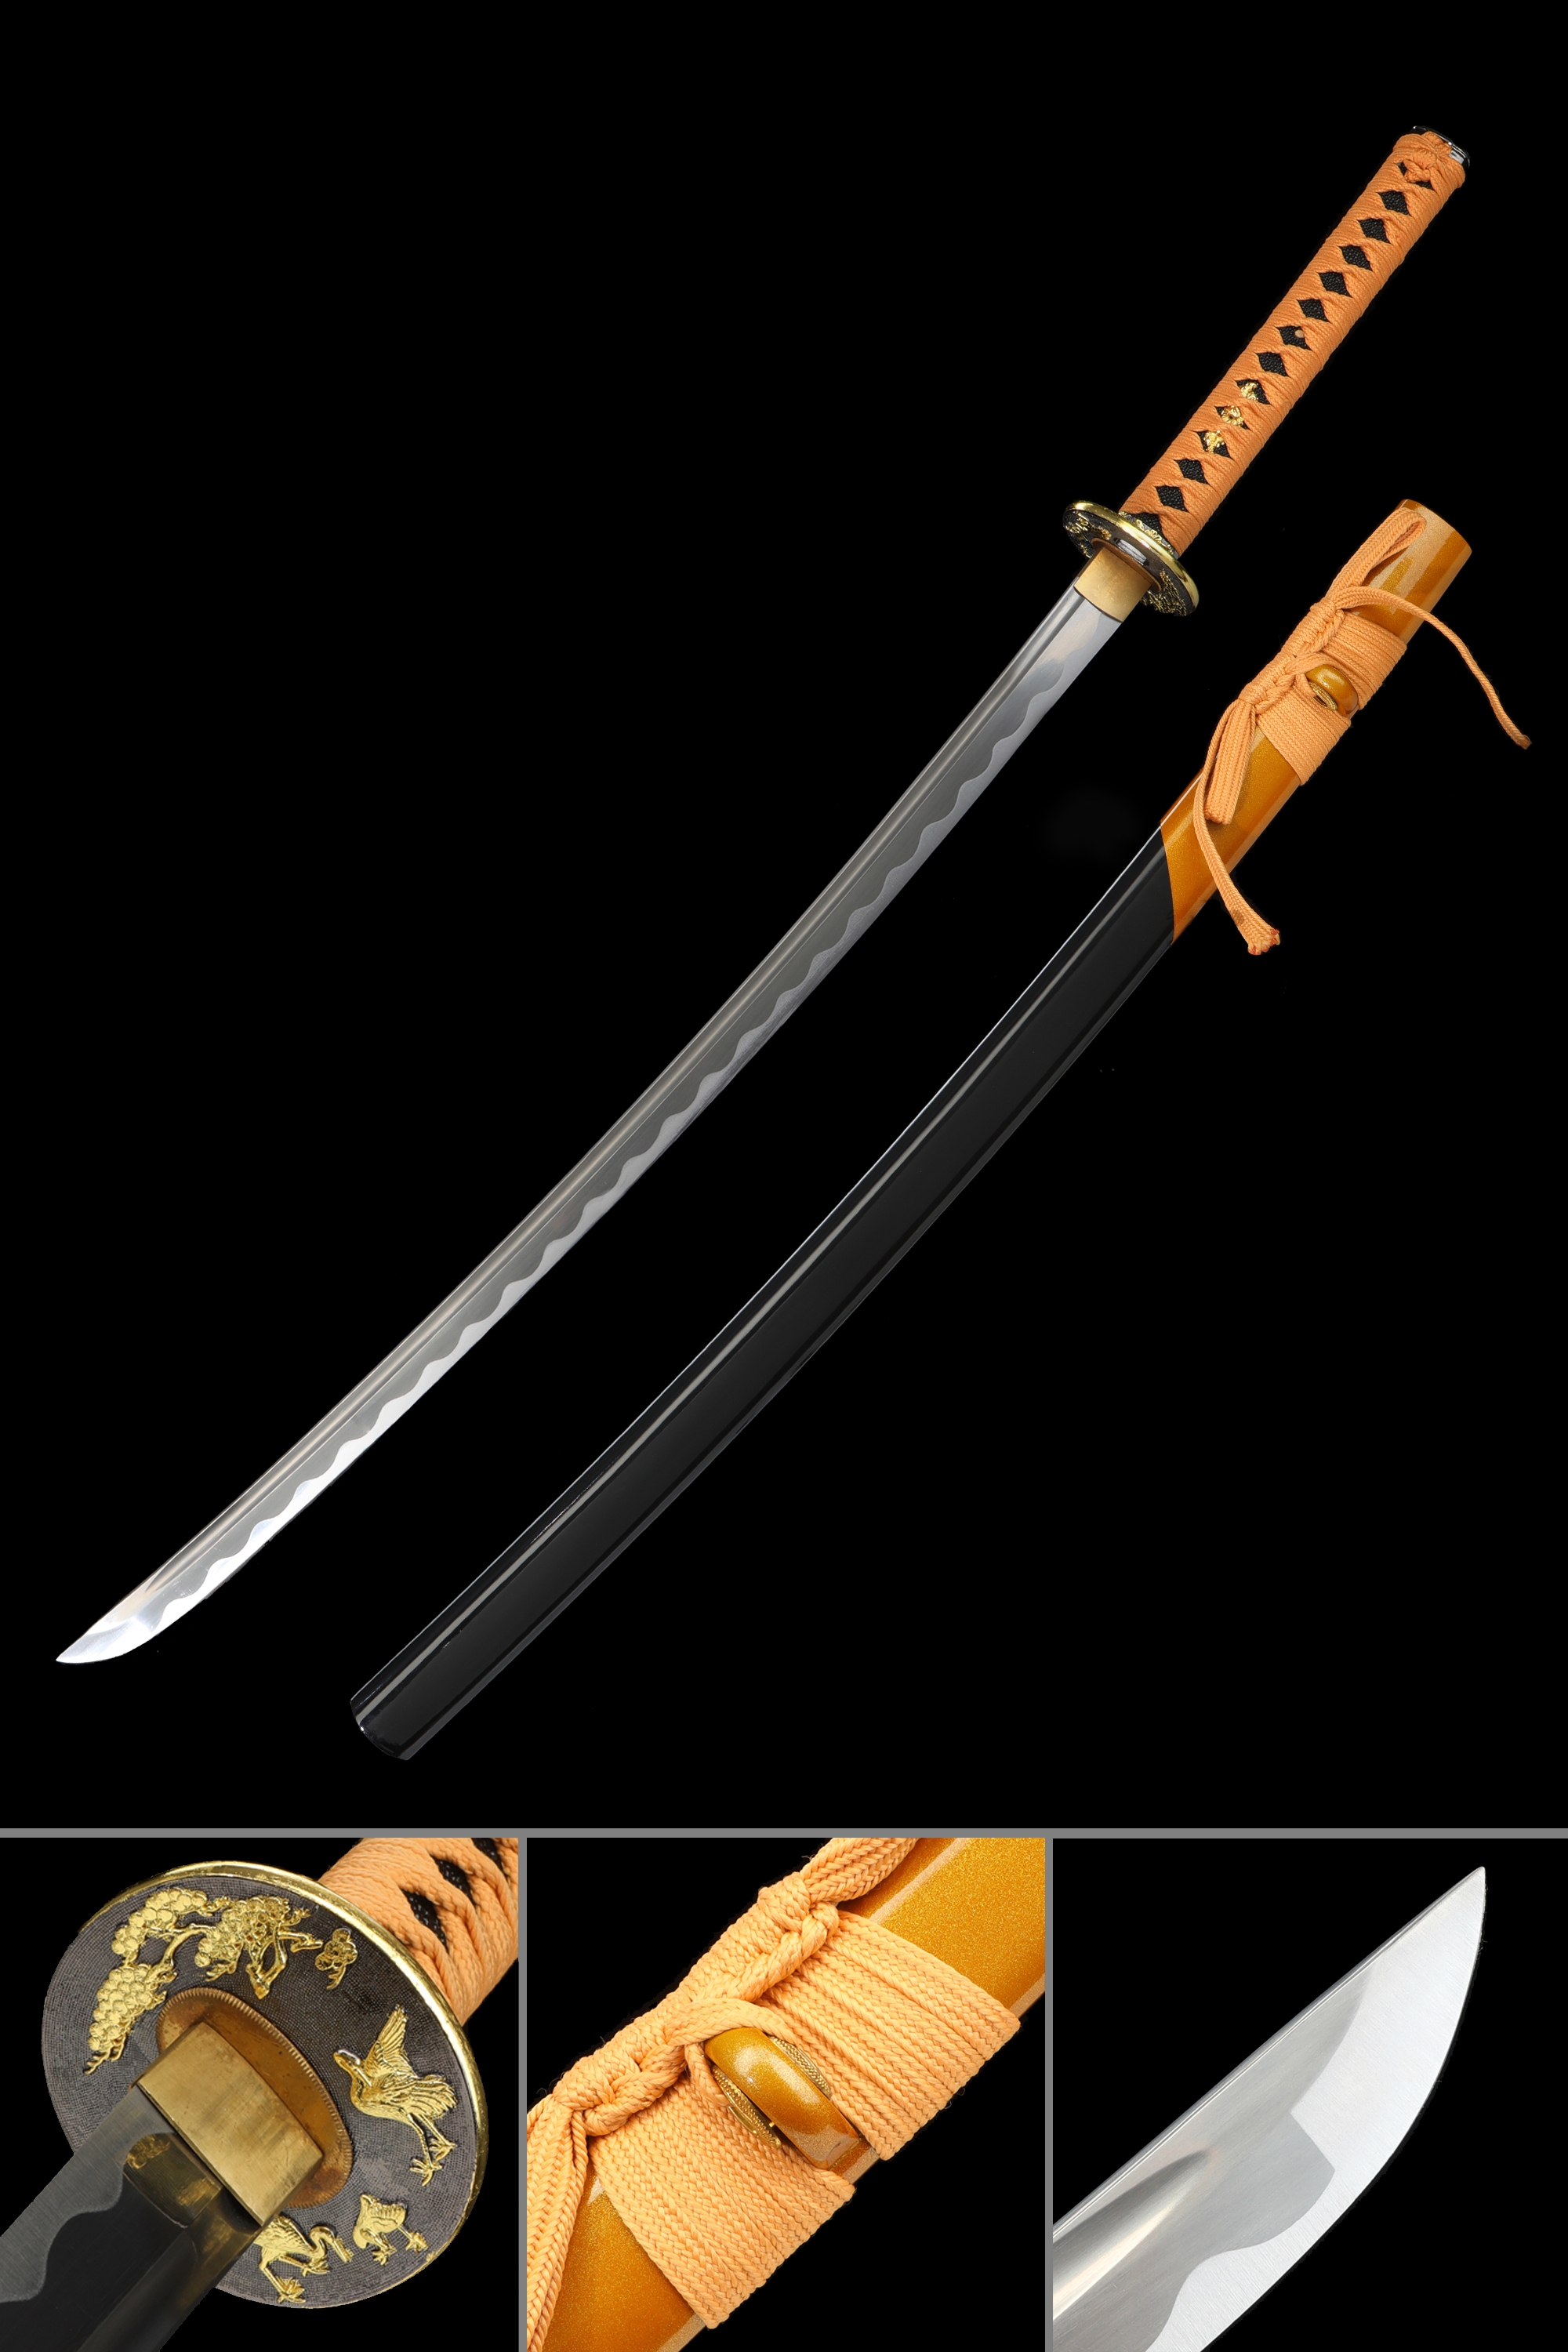 Handmade Full Tang Japanese Samurai Sword With 1060 Carbon Steel Blade